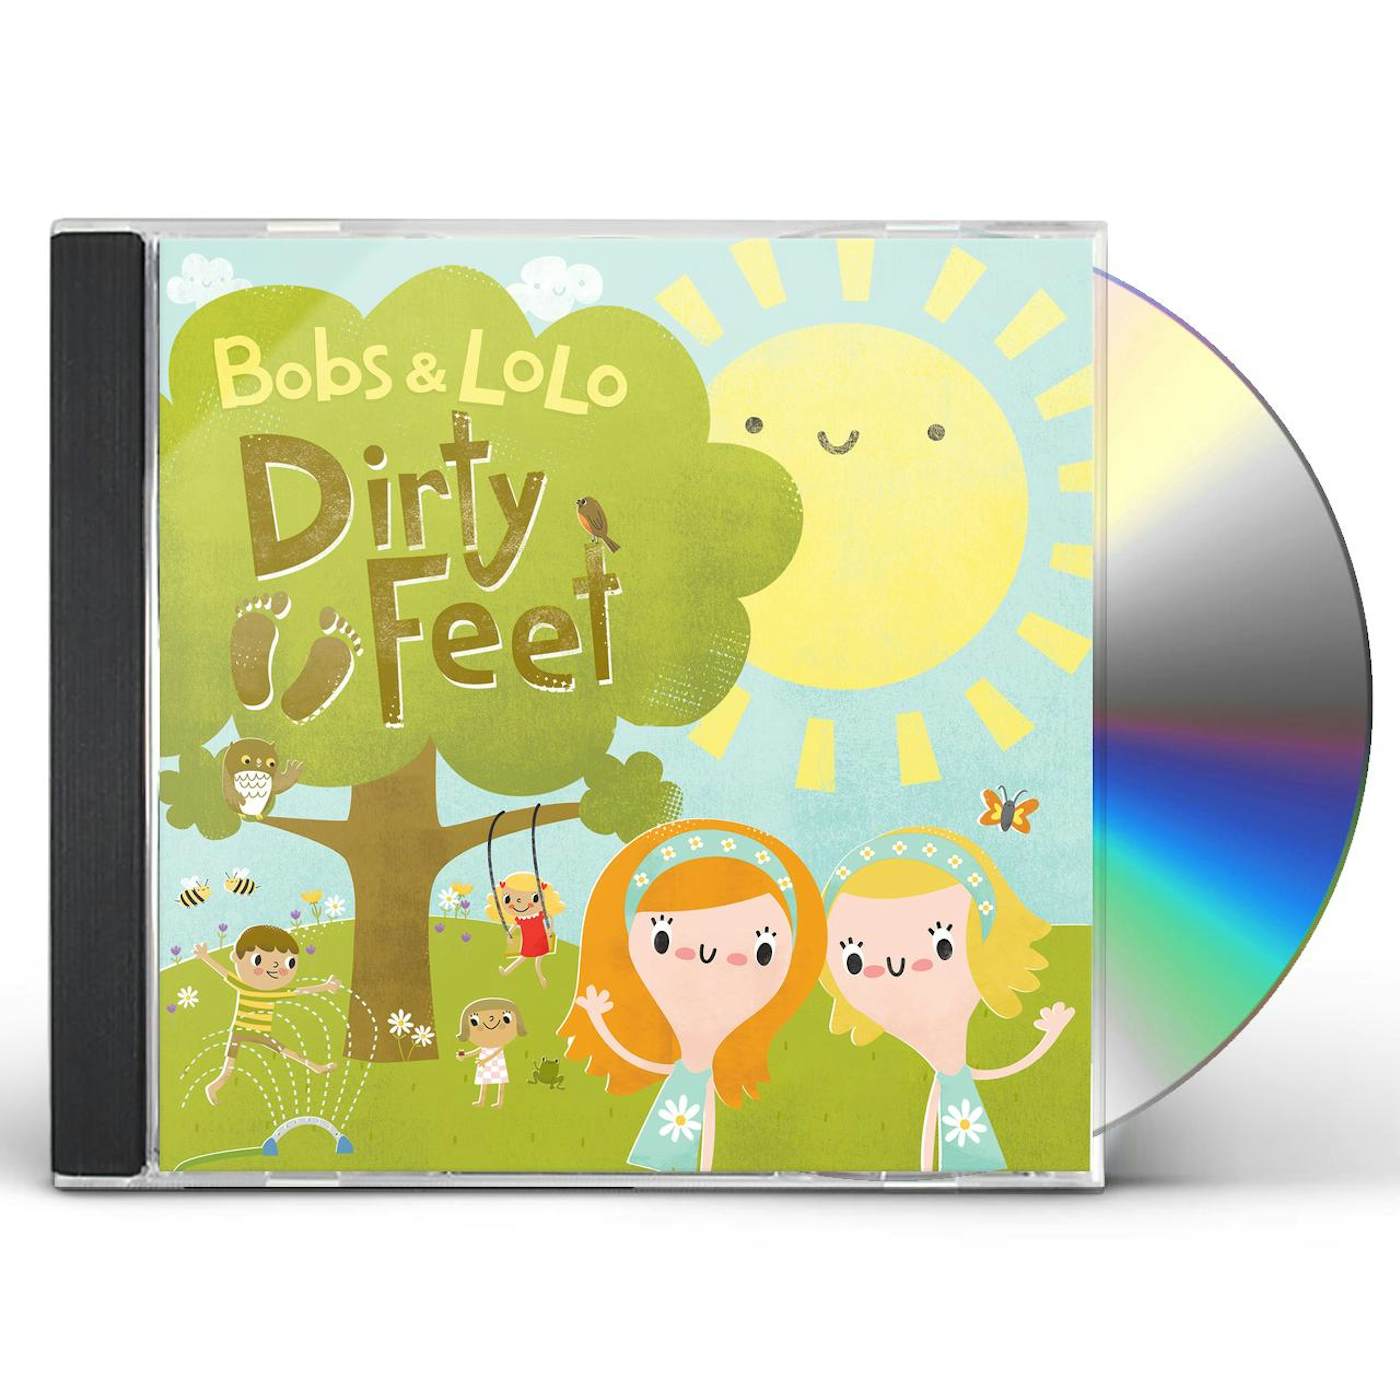 Bobs & Lolo DIRTY FEET CD